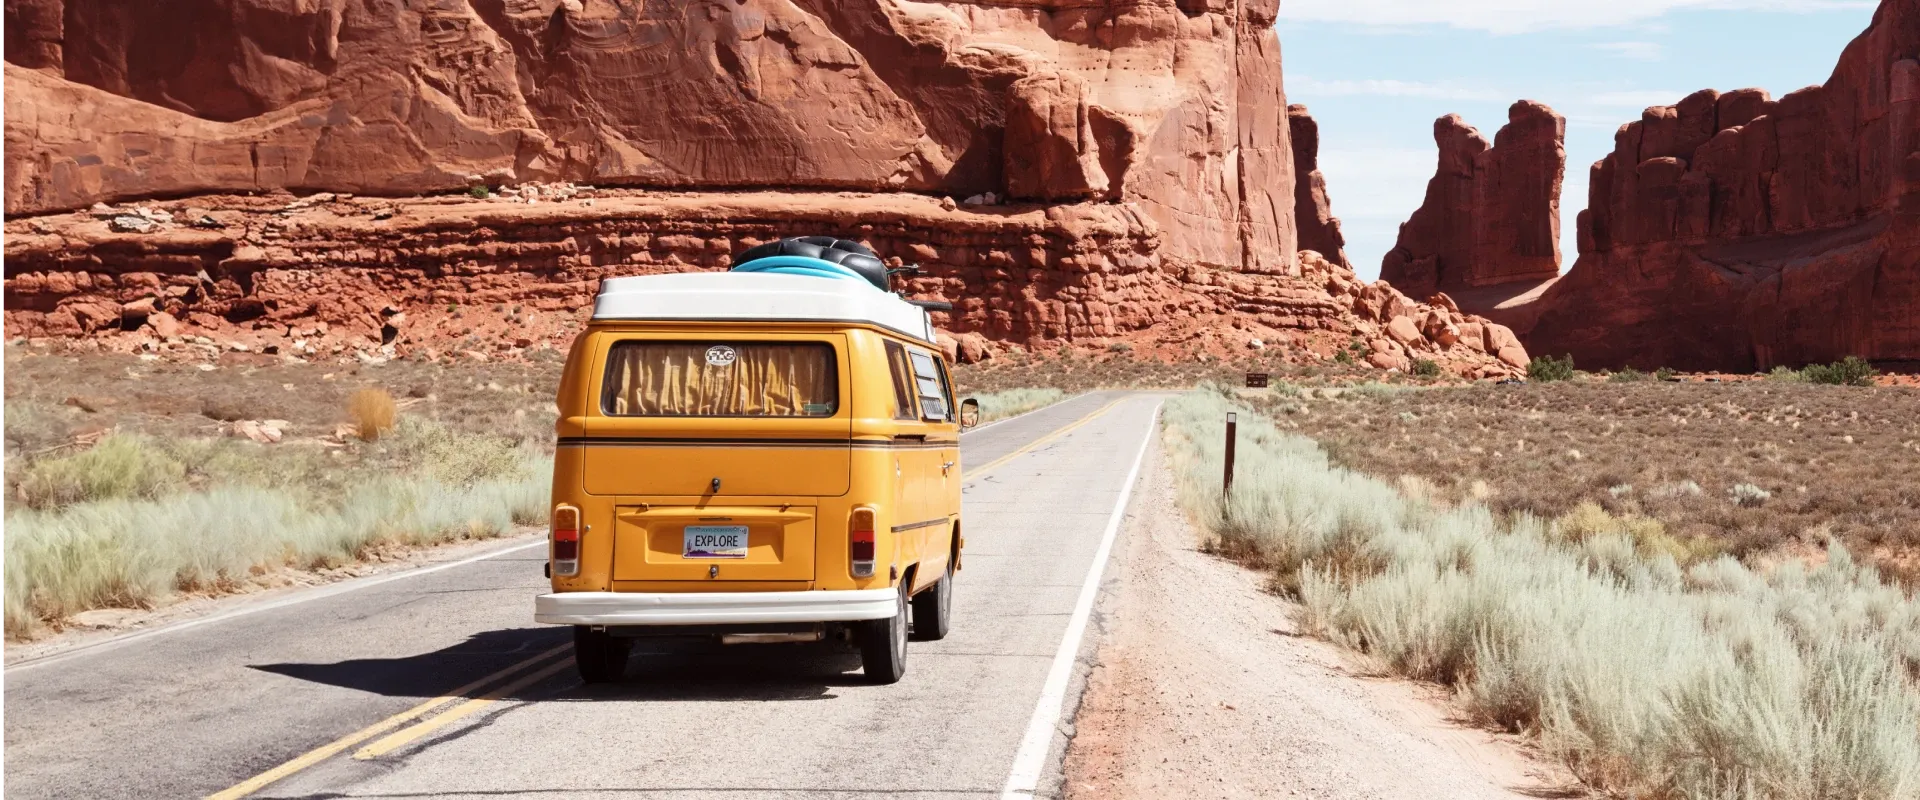 A yellow van drives through red rocks at a national park